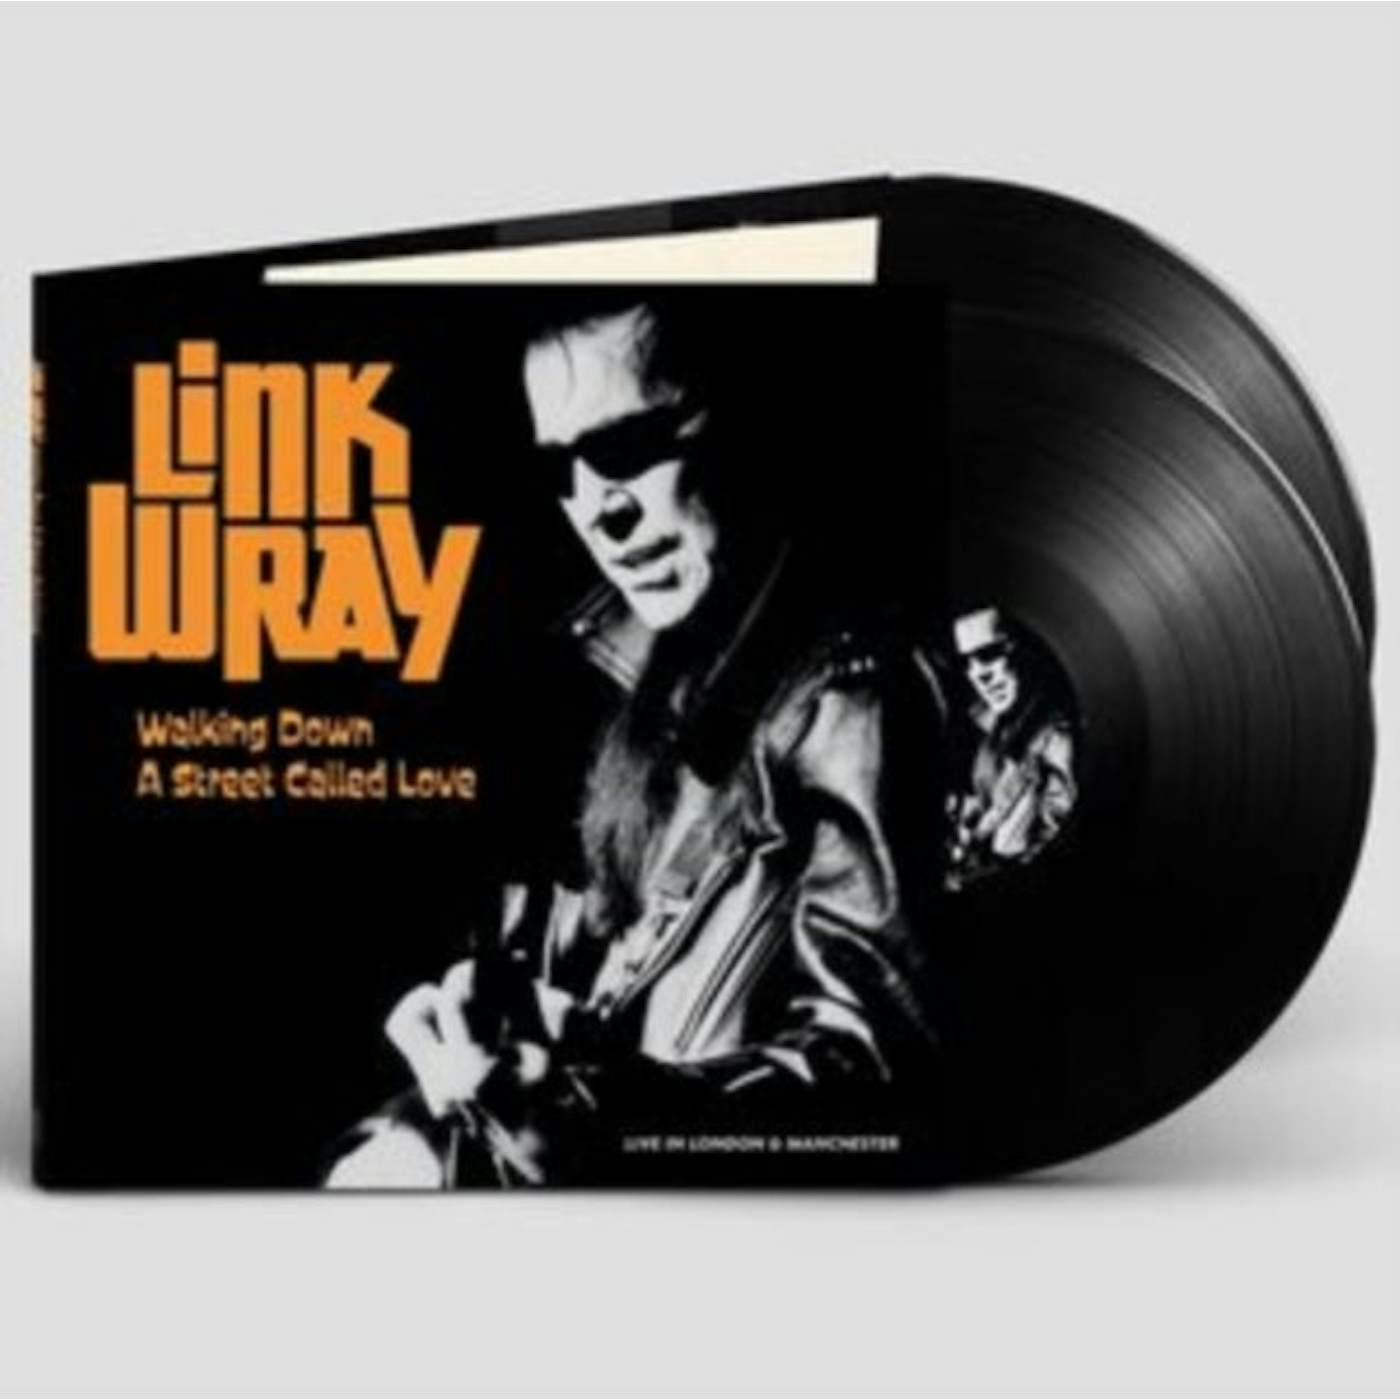 Link Wray LP - Walking Down A Street Called Love (Vinyl)